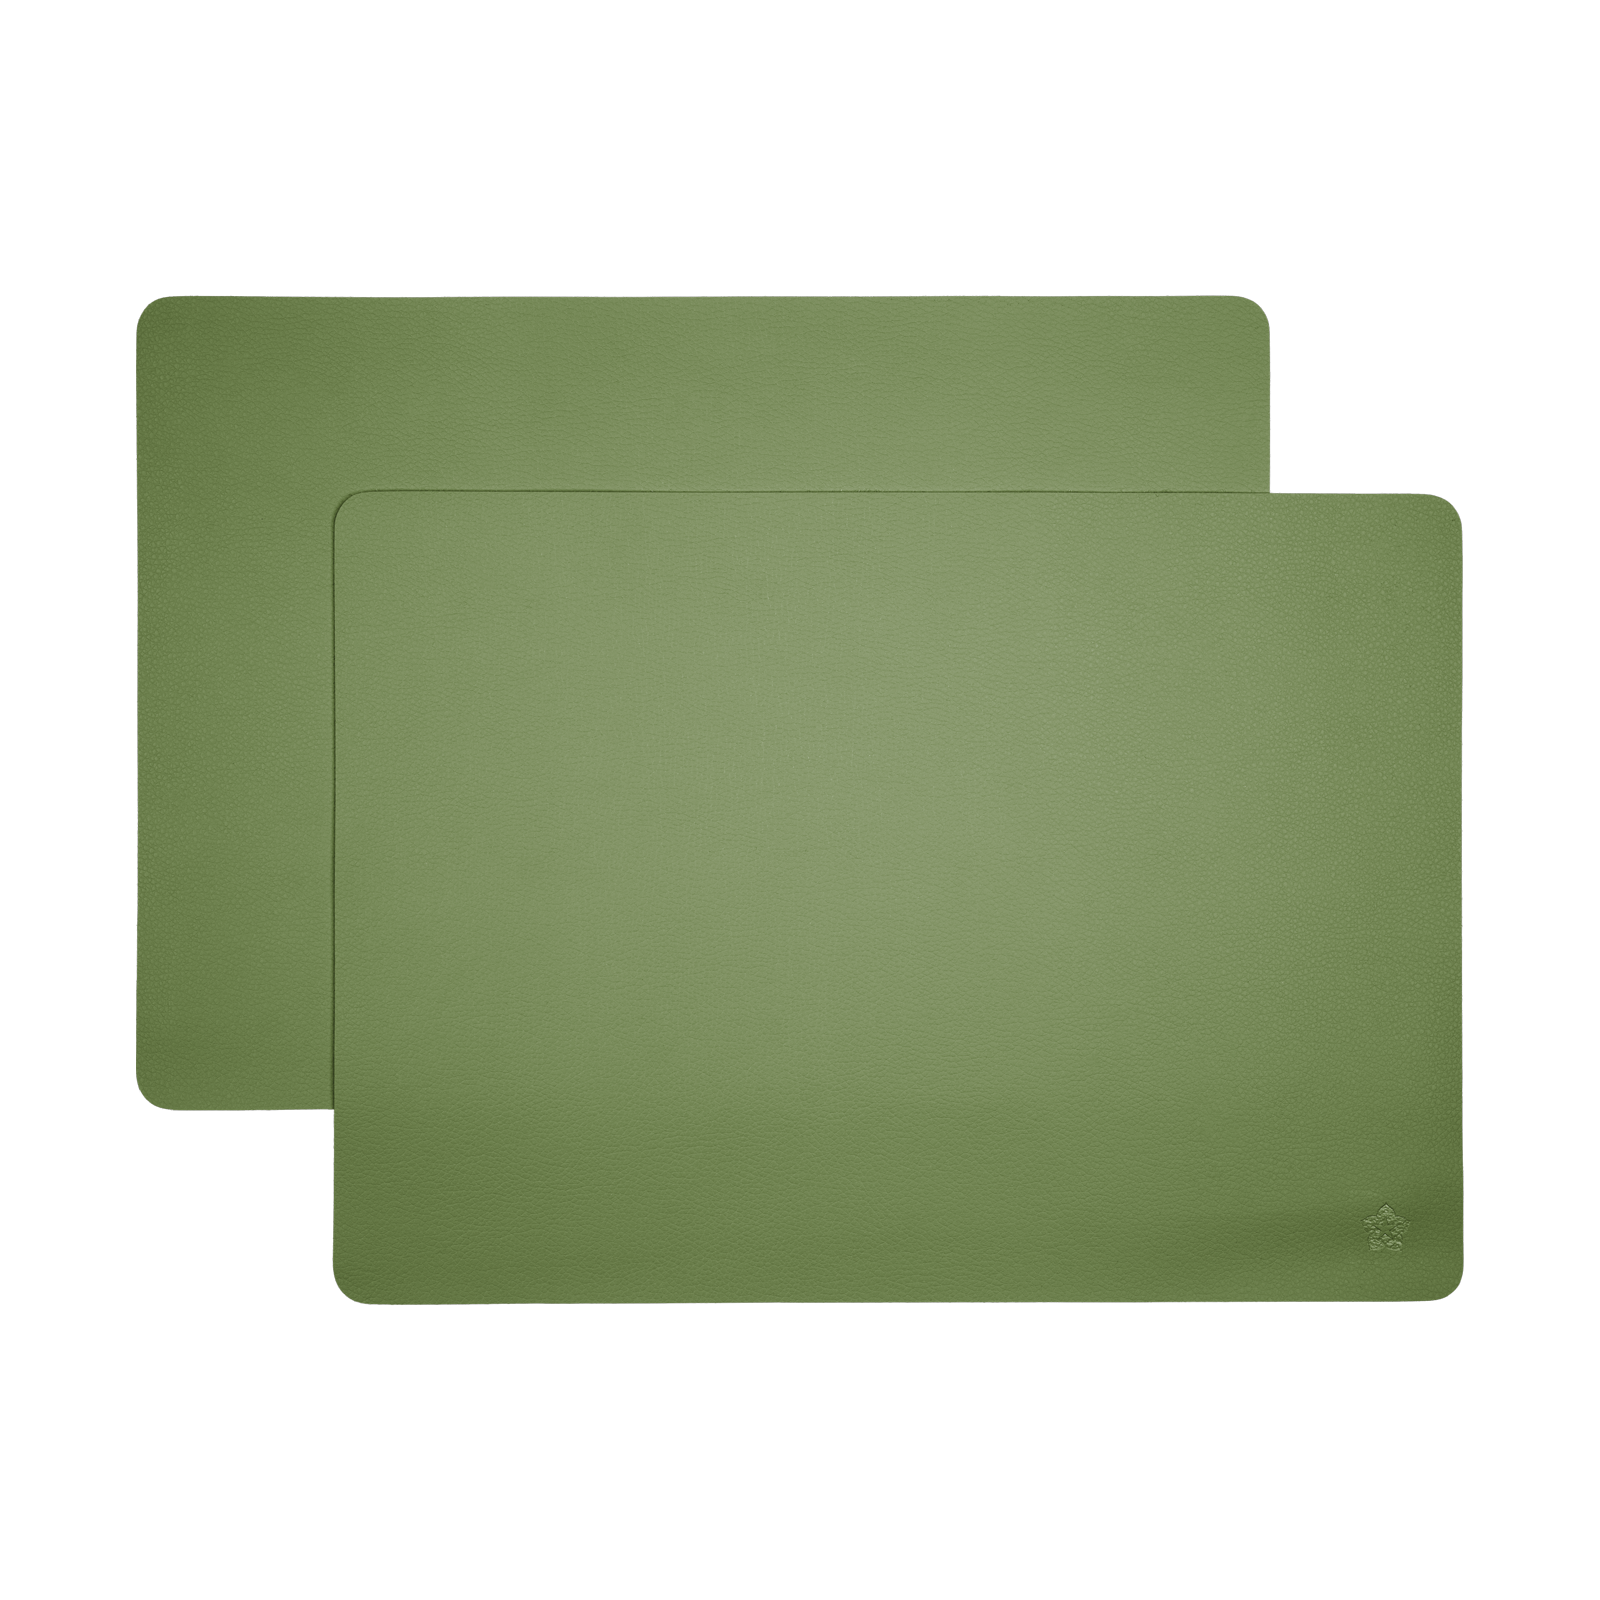 Größe: 33x 46 cm Farbe: grasgrün #farbe_grasgrün